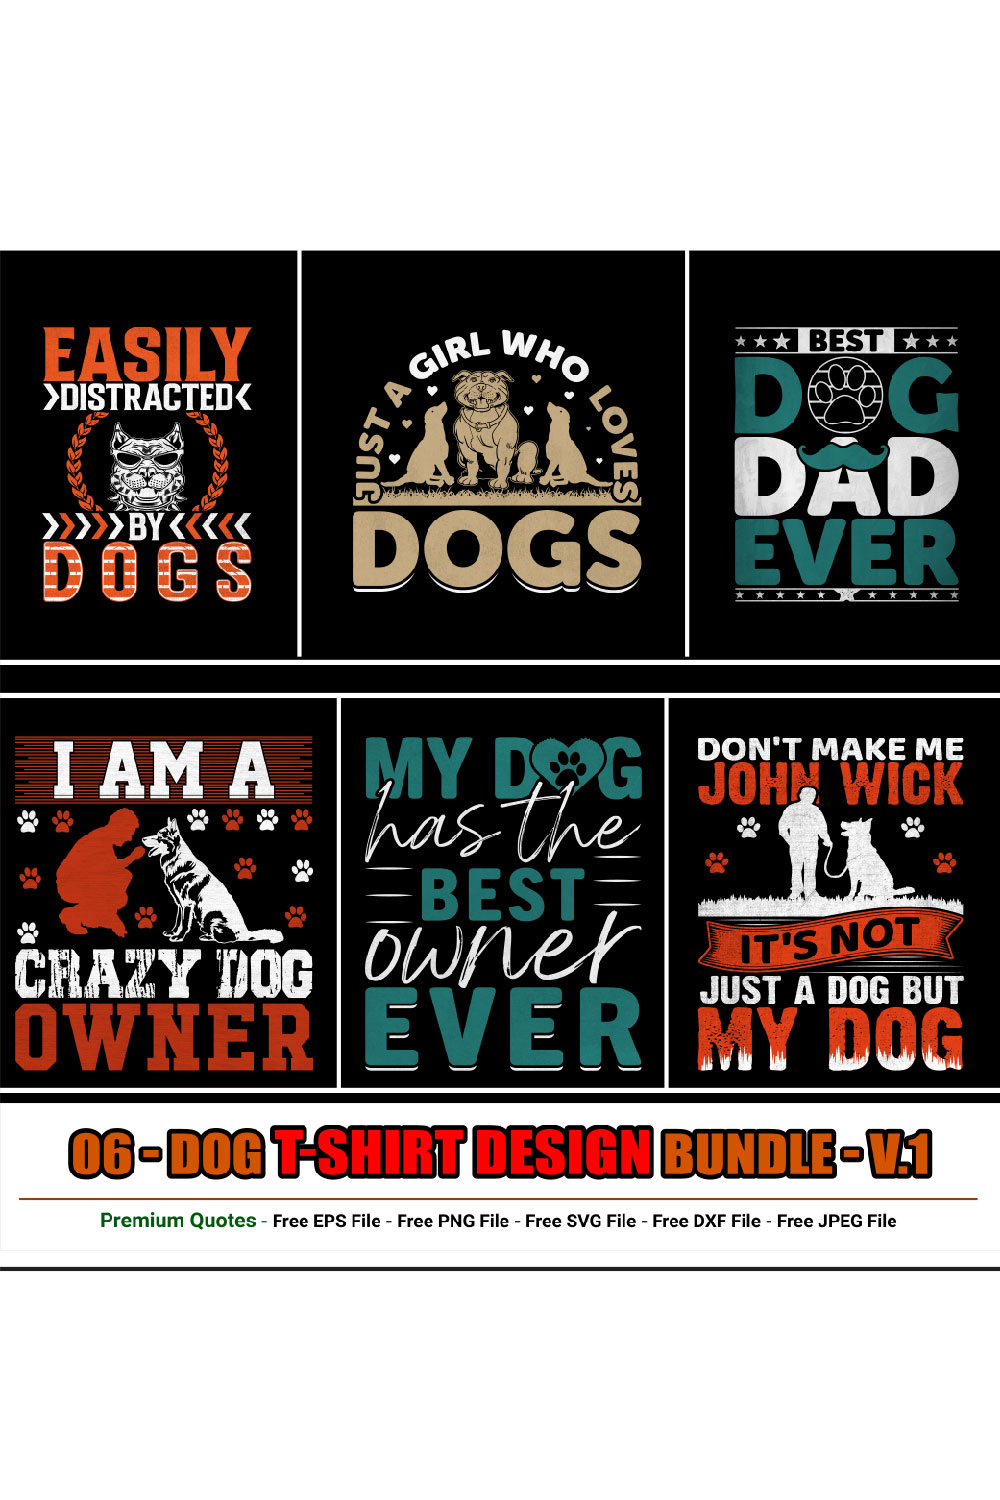 Dog t-shirt design bundle pinterest preview image.